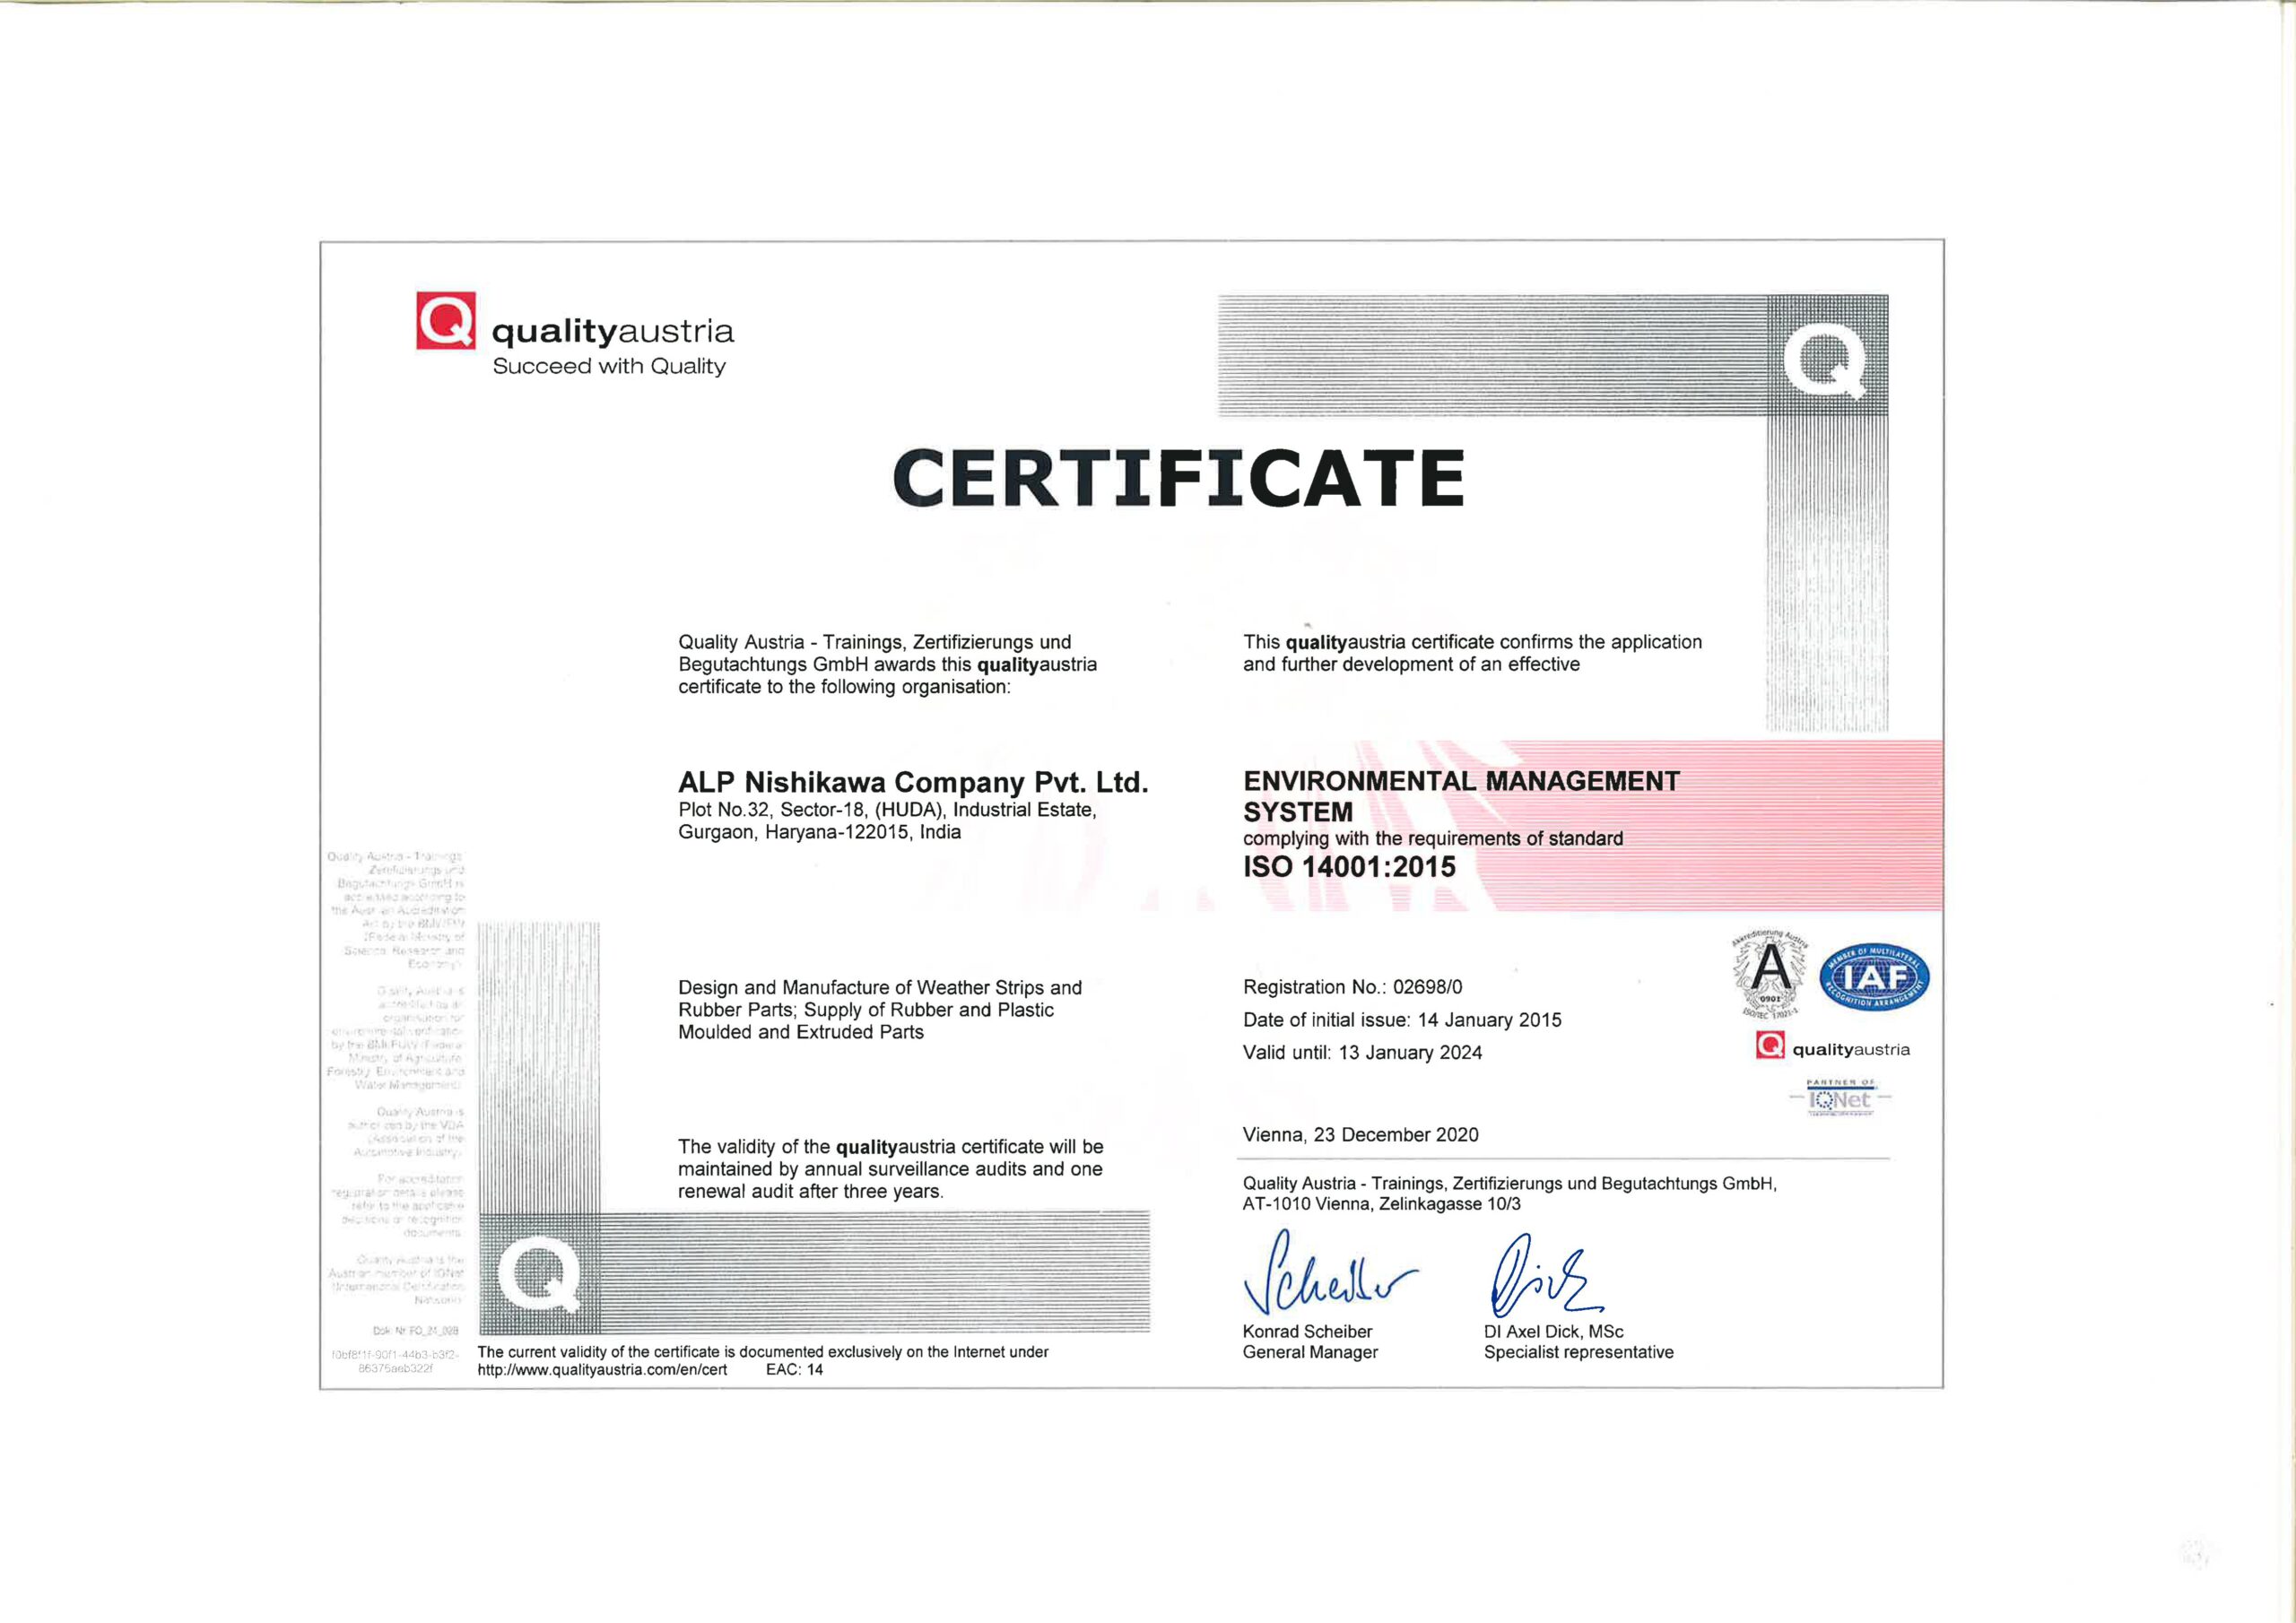 ISO 14001:2015 environmental management system certificate awarded to ALP Nishikawa Company Pvt. Ltd. by qualityaustria.